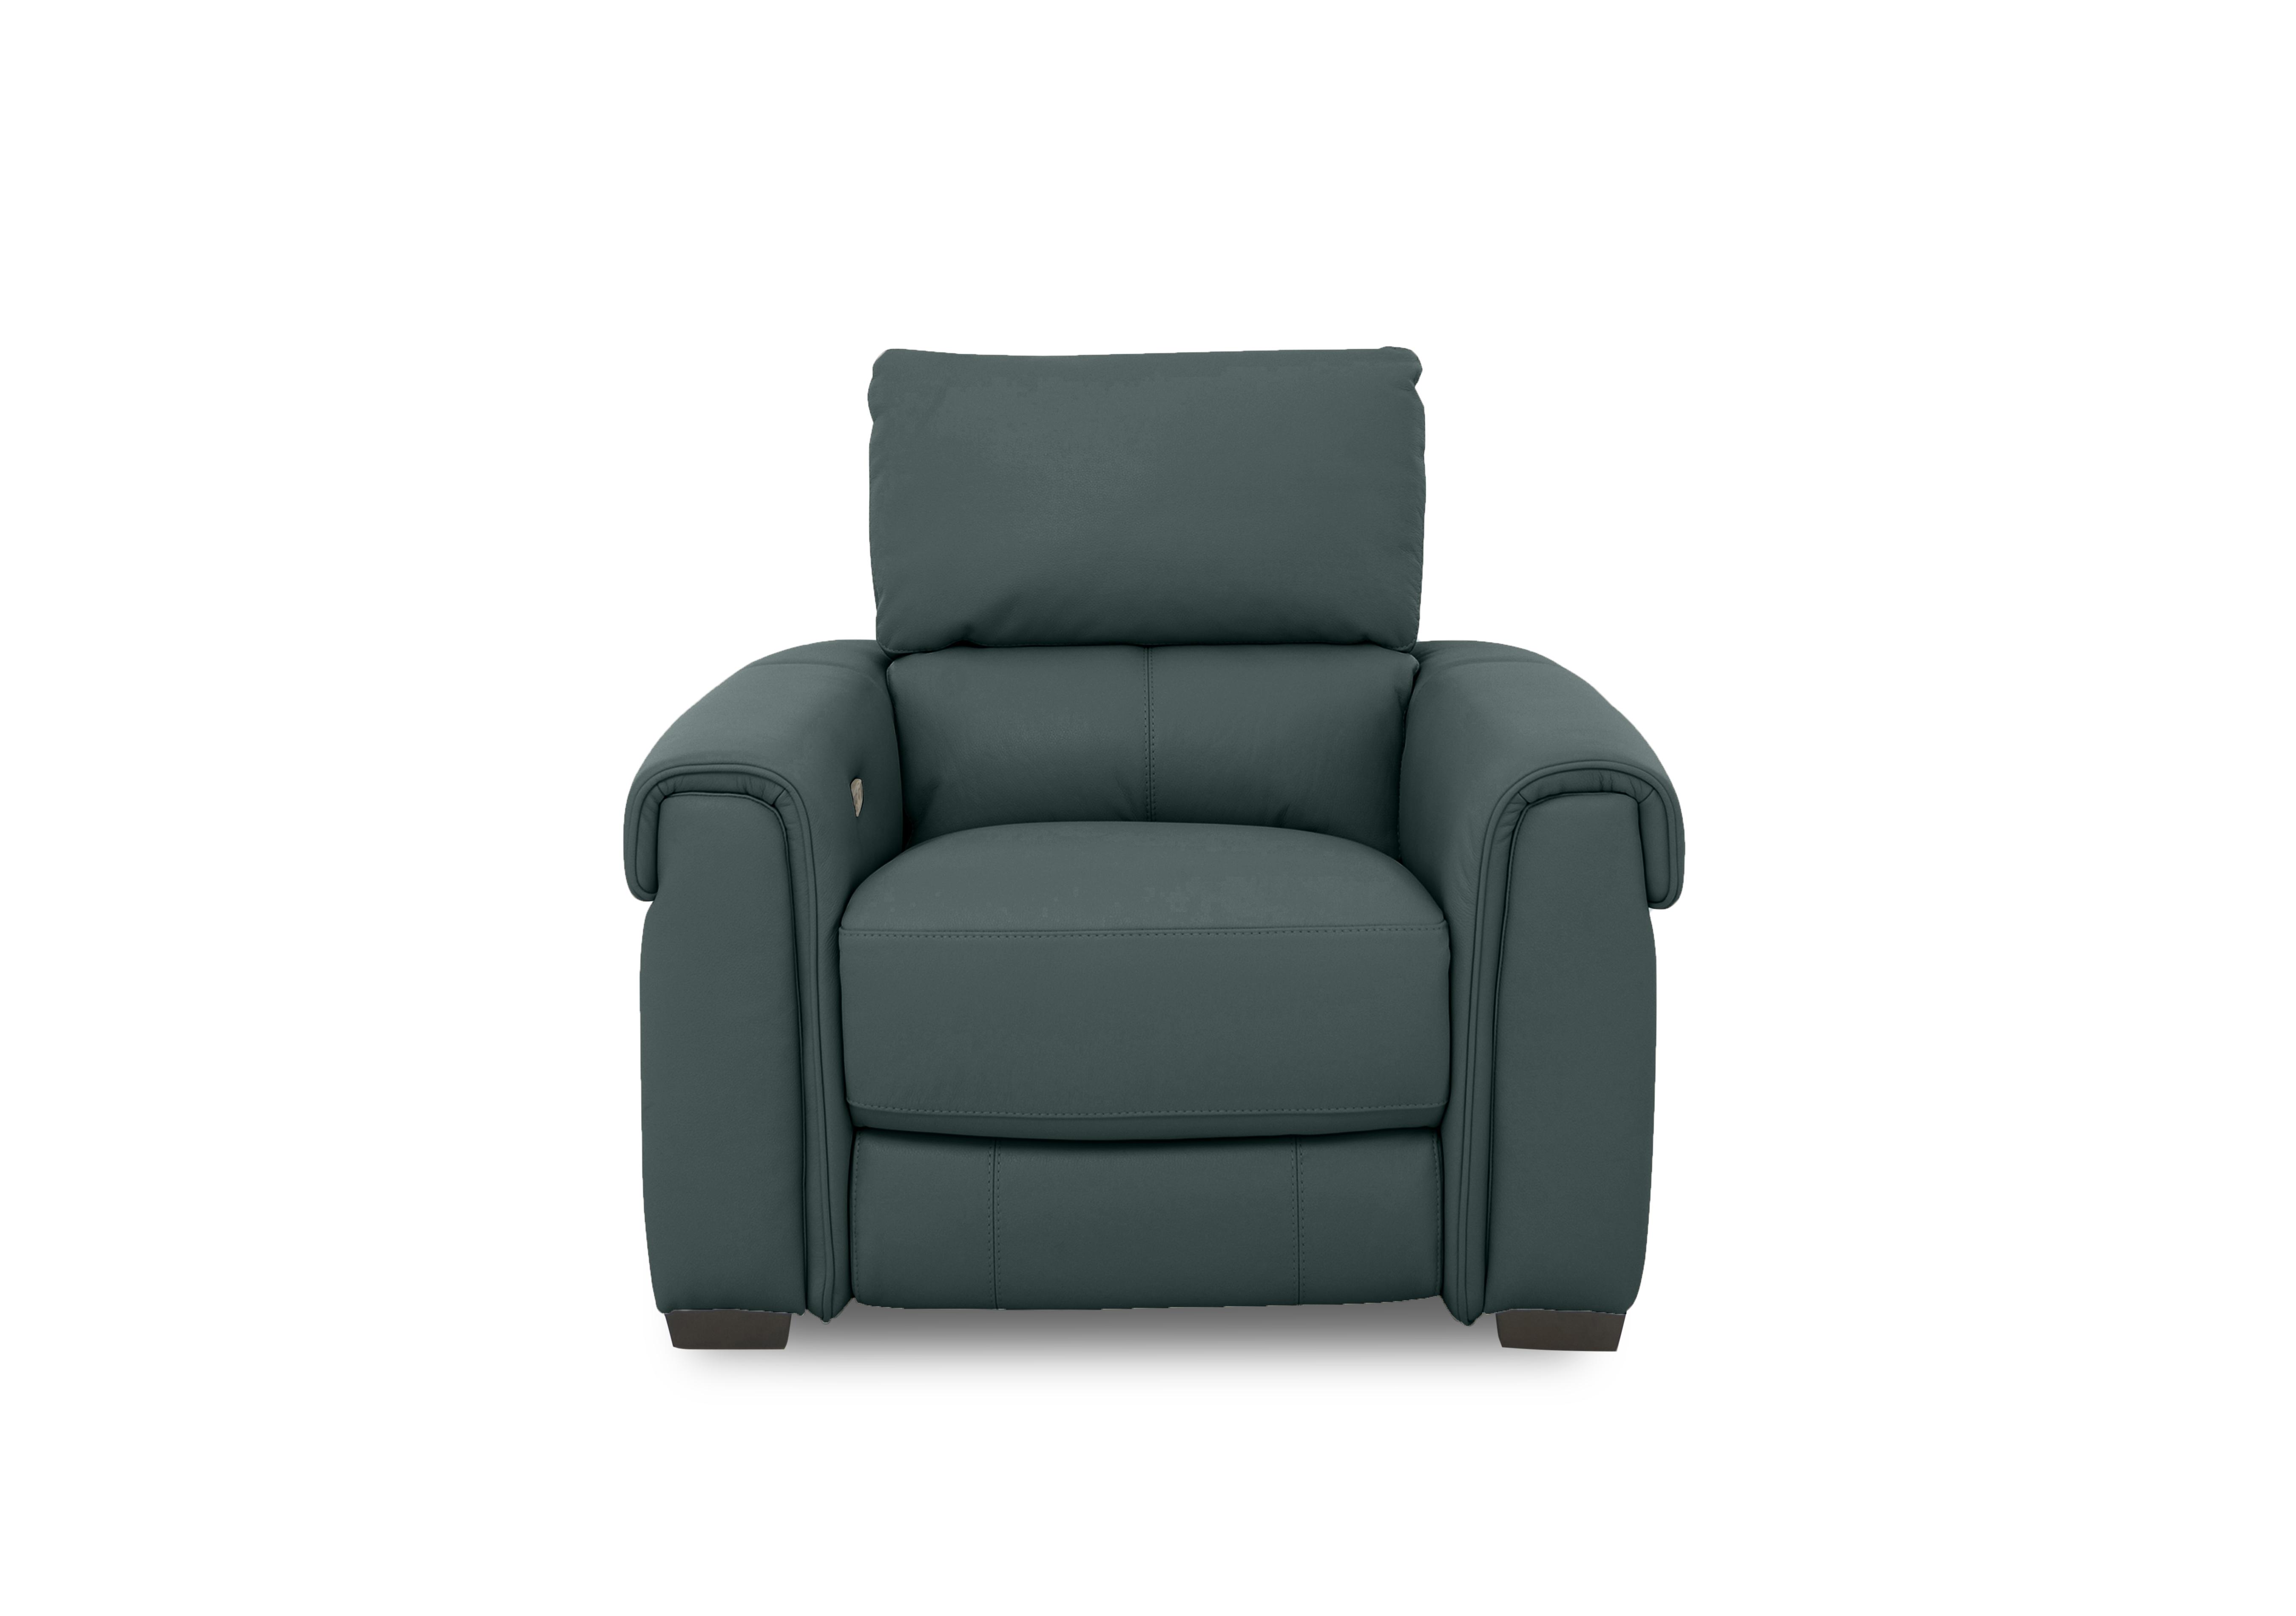 Nixon Leather Chair in Bv-301e Lake Green on Furniture Village